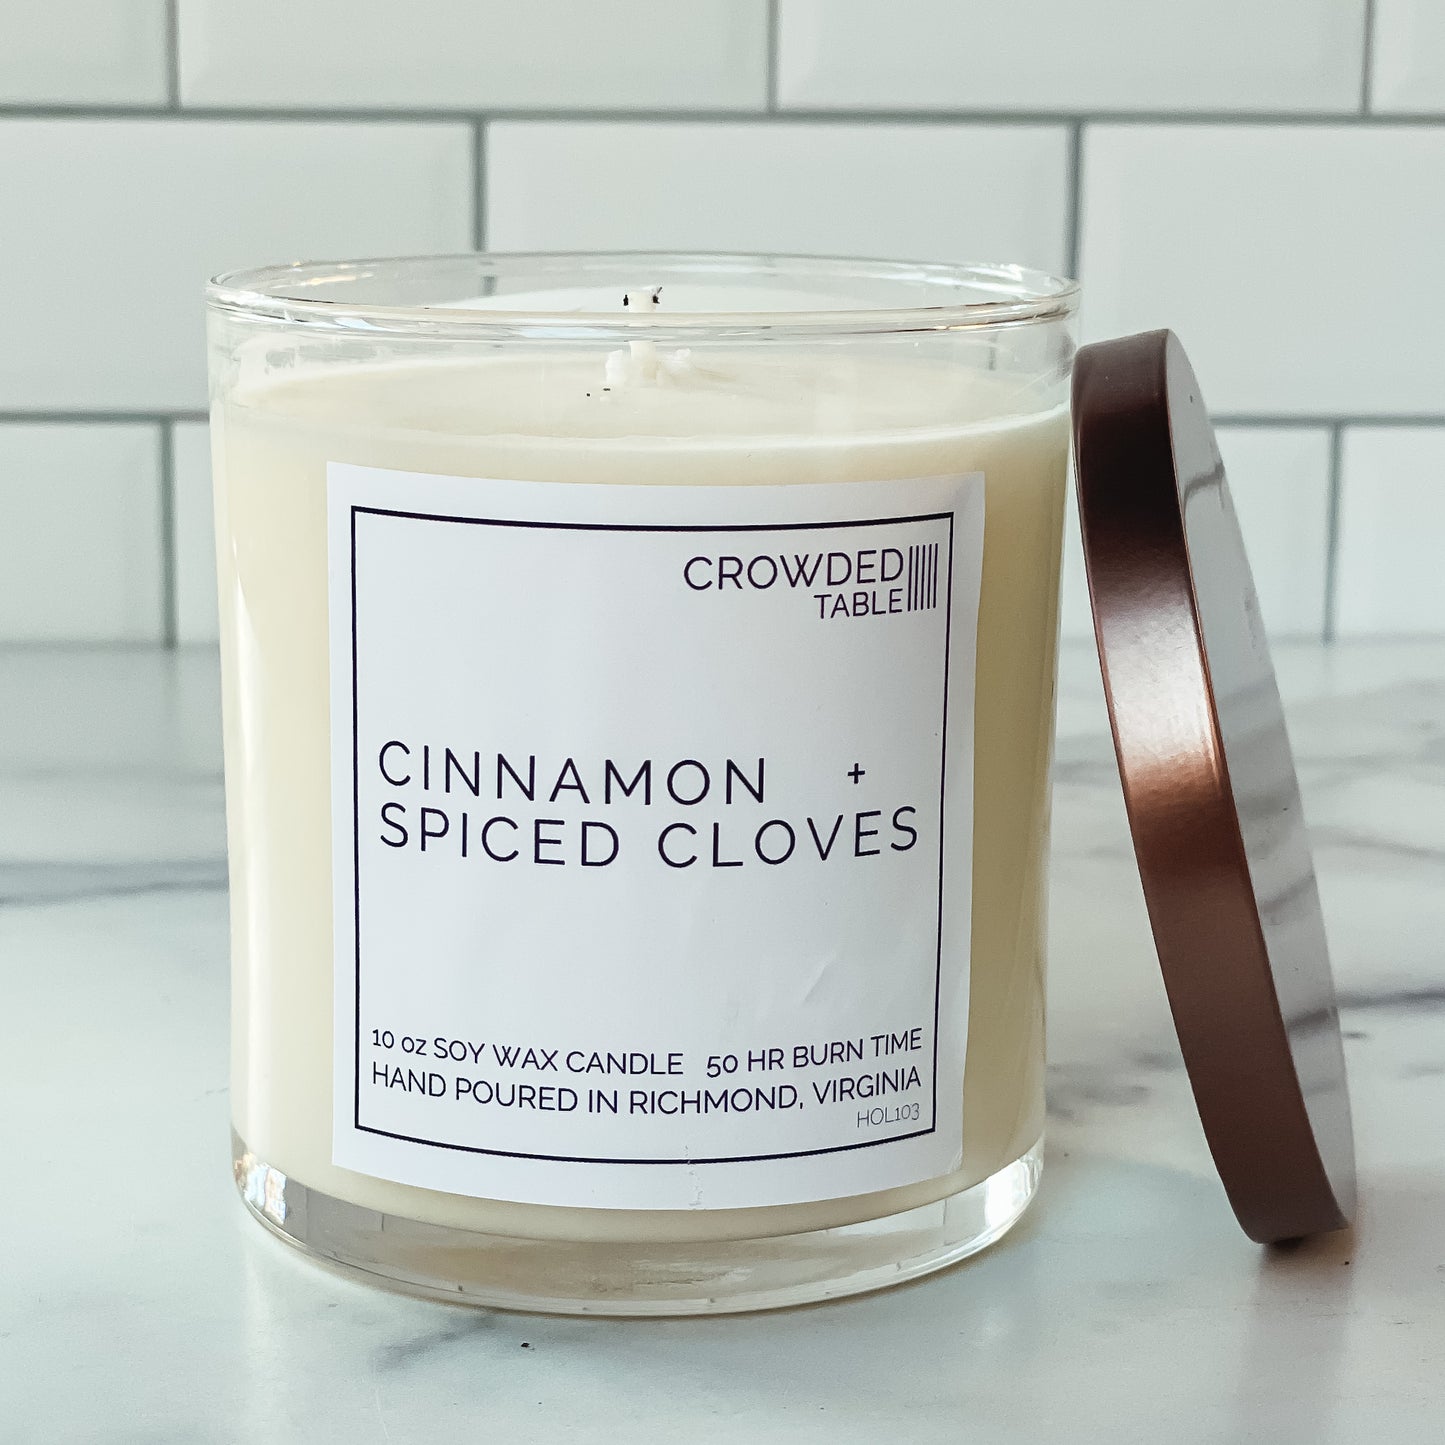 Cinnamon + Spiced Cloves 10 oz. Pure Soy Wax Candle